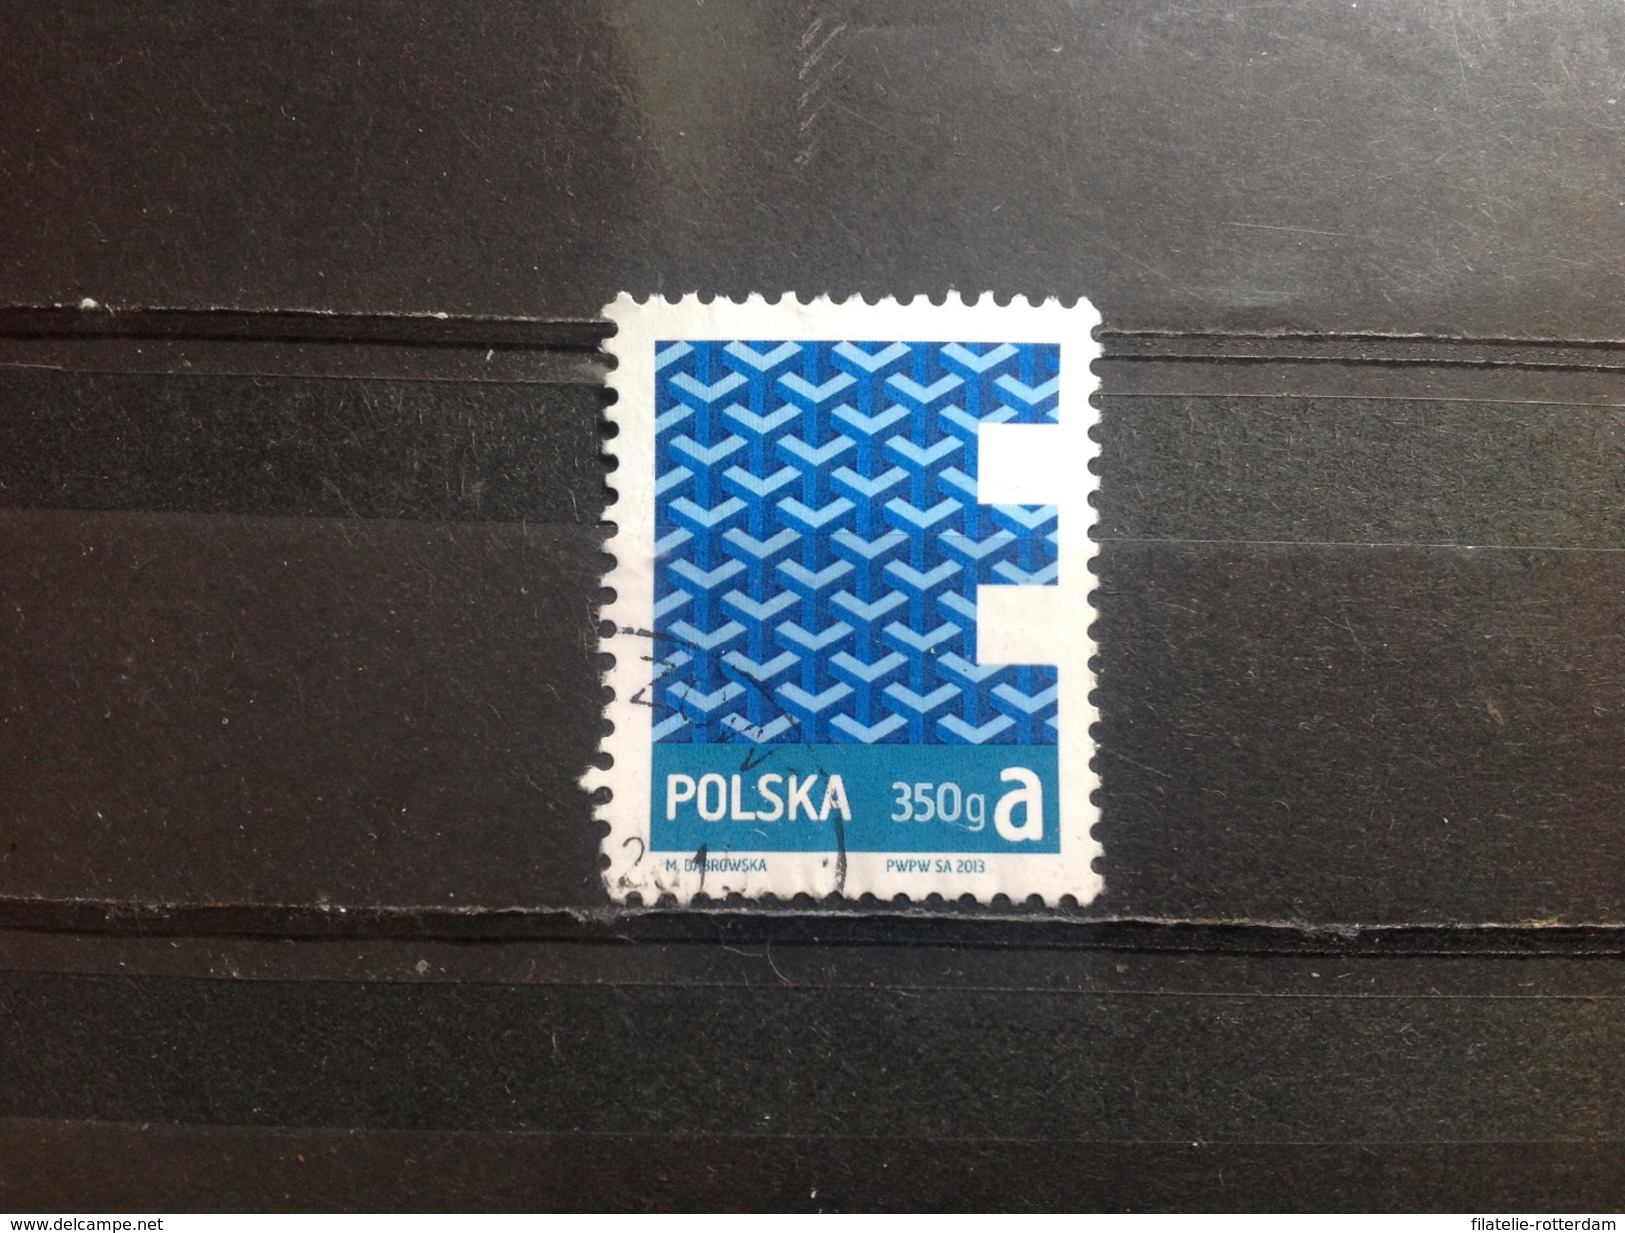 Polen / Poland - Economy En Priority (A) 2013 - Used Stamps